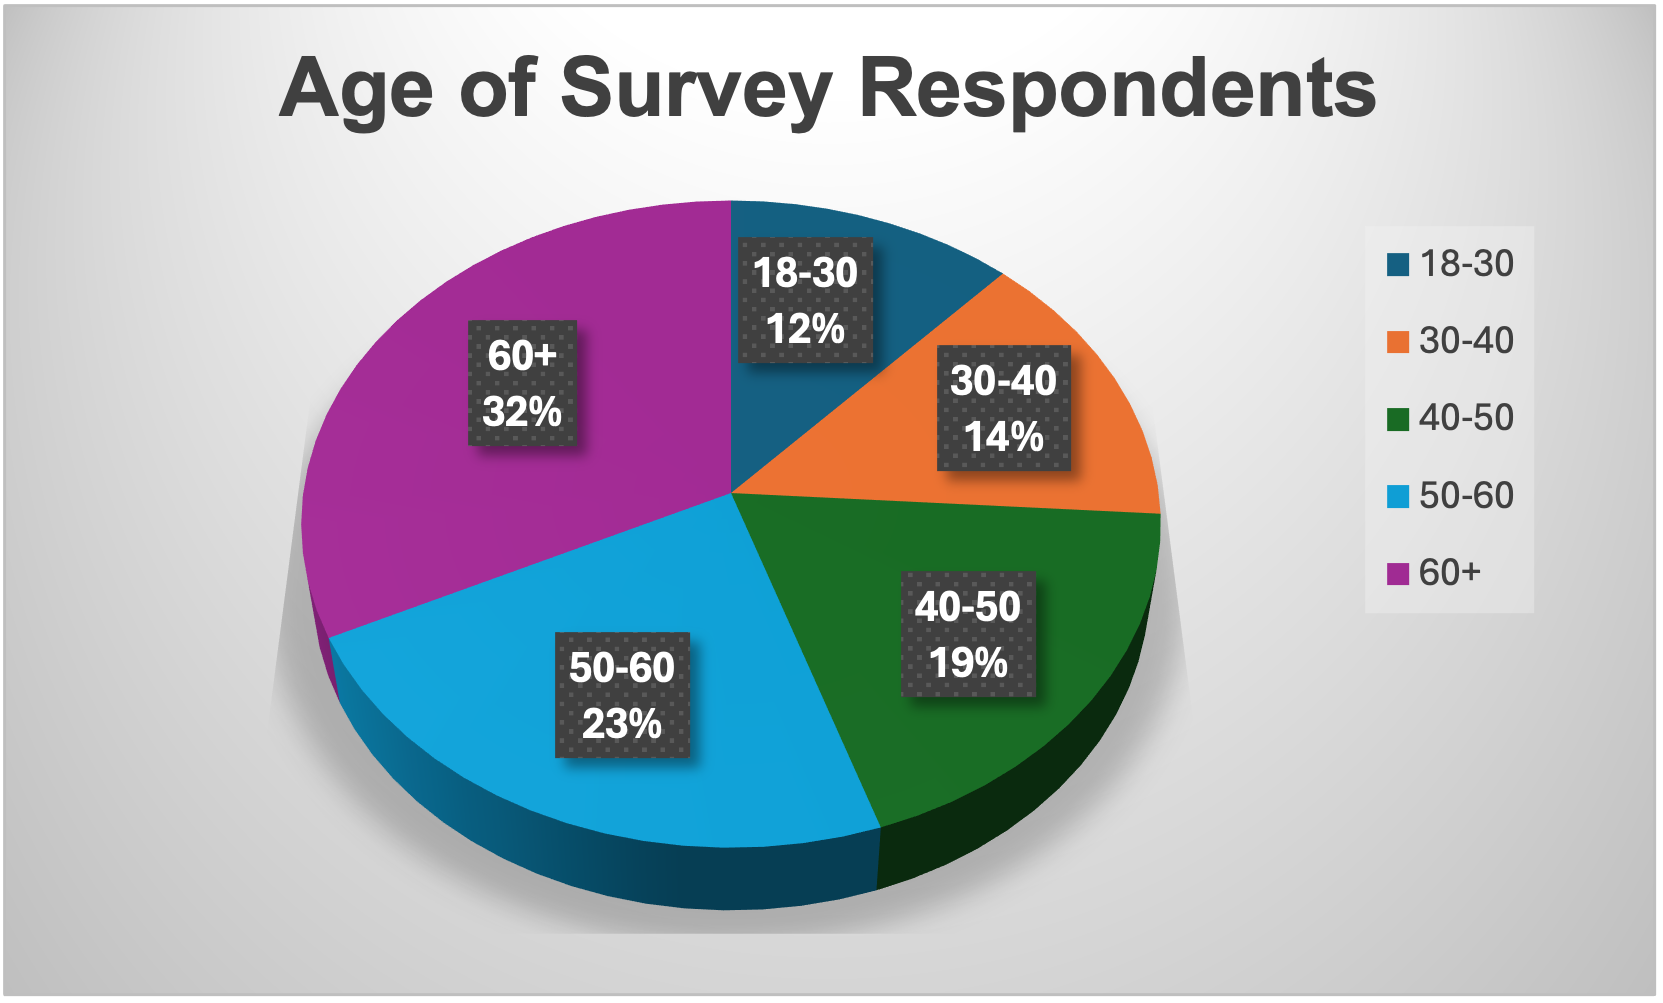 Age of survey respondents pie chart